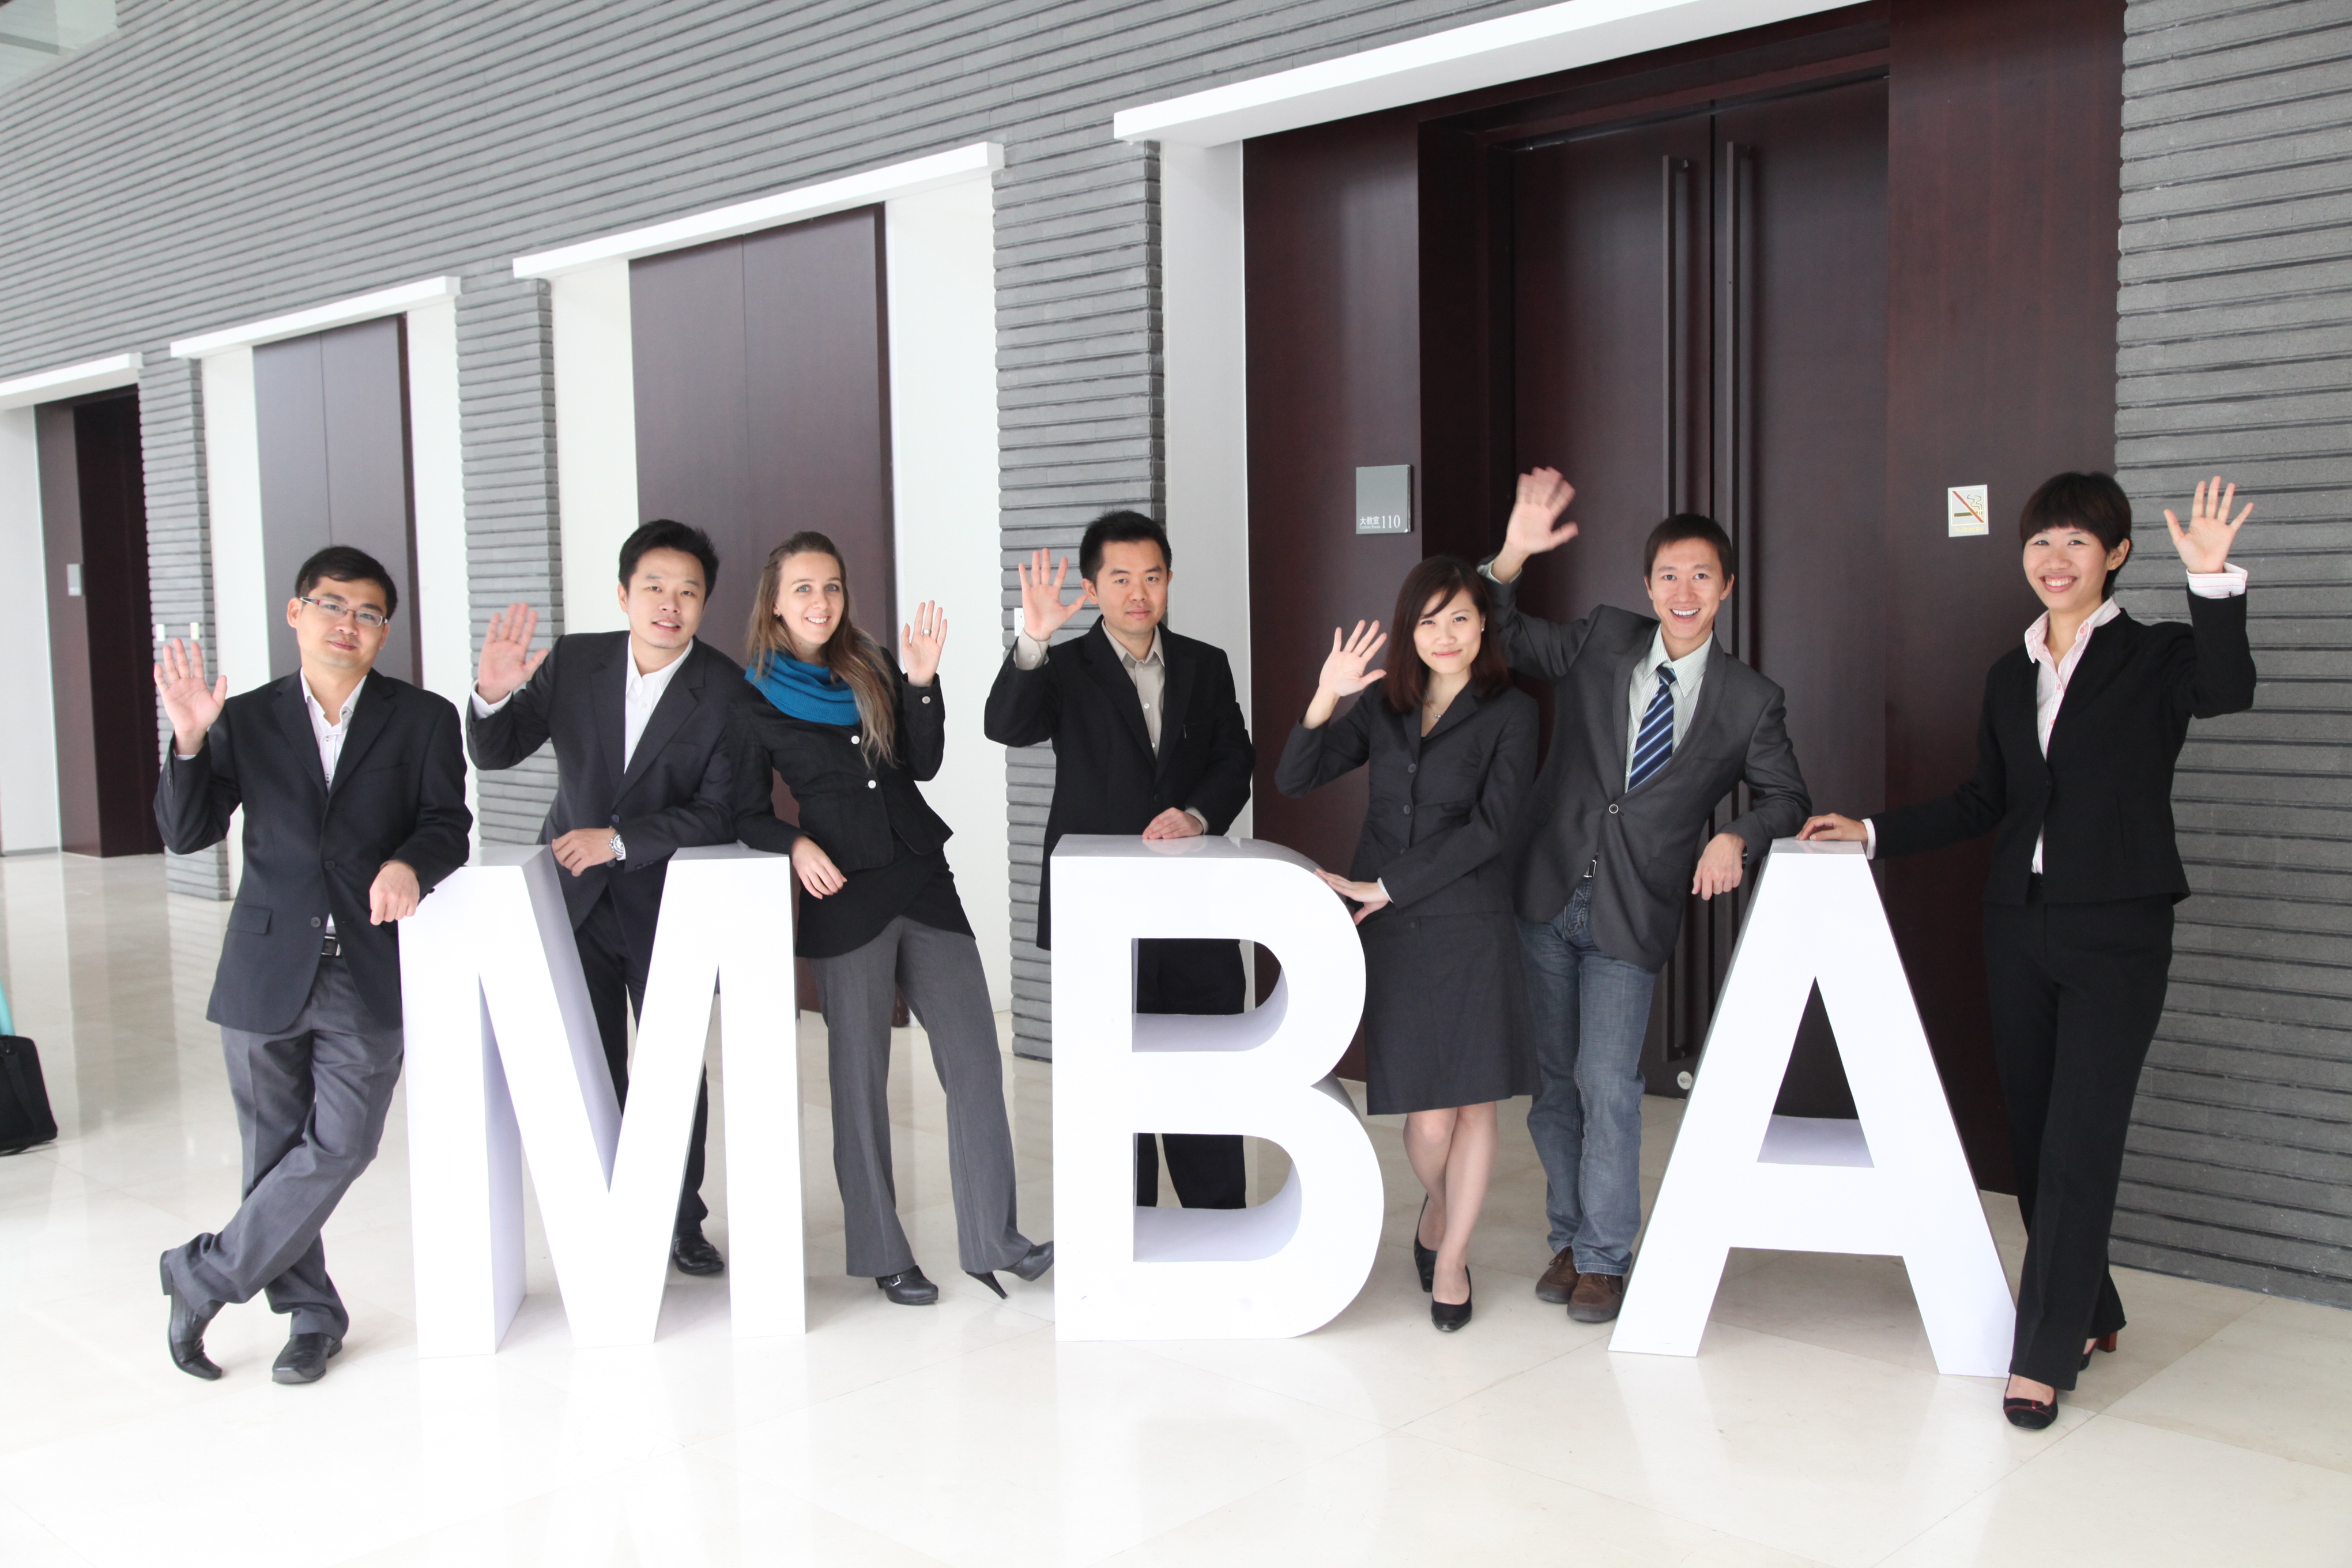 Обучение мба. Бизнес-образование MBA. MBA школа. MBA бизнес. Бизнес школы МВА.